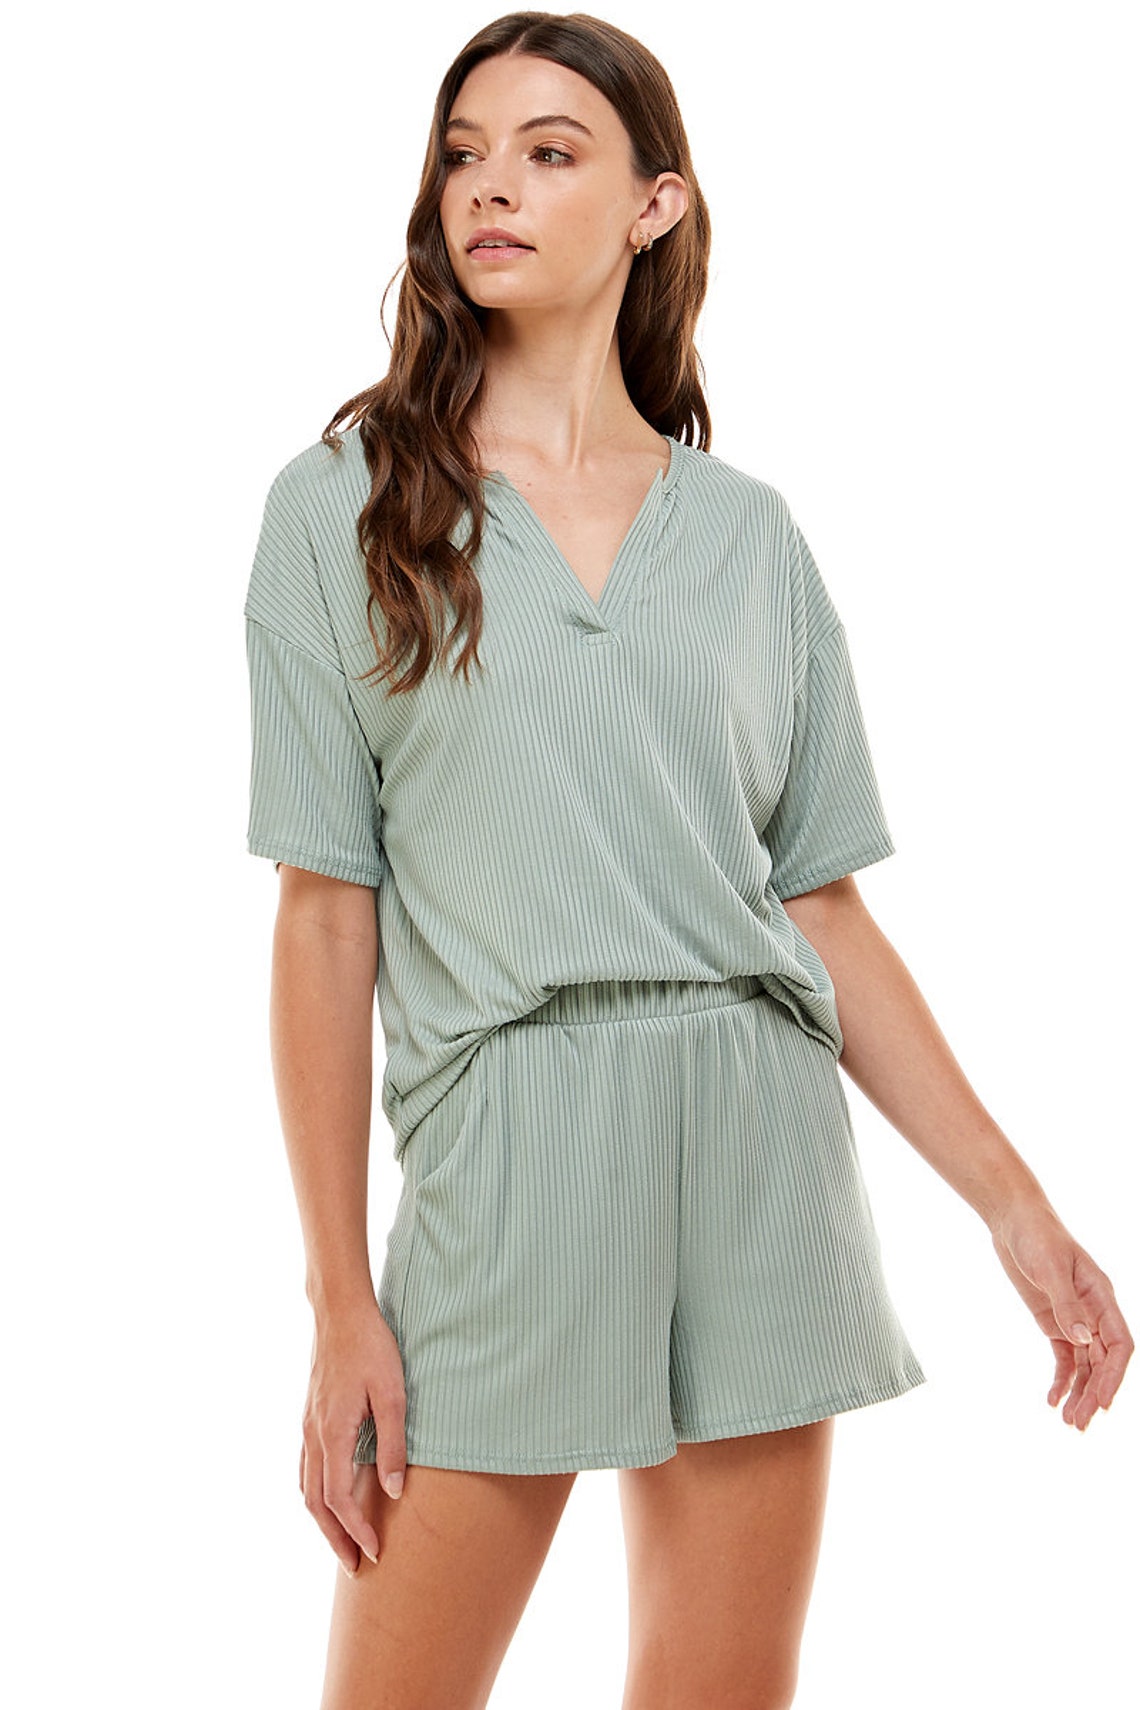 Women's Ribbed Knit Pajama Sets Short Sleeve Top and | Etsy